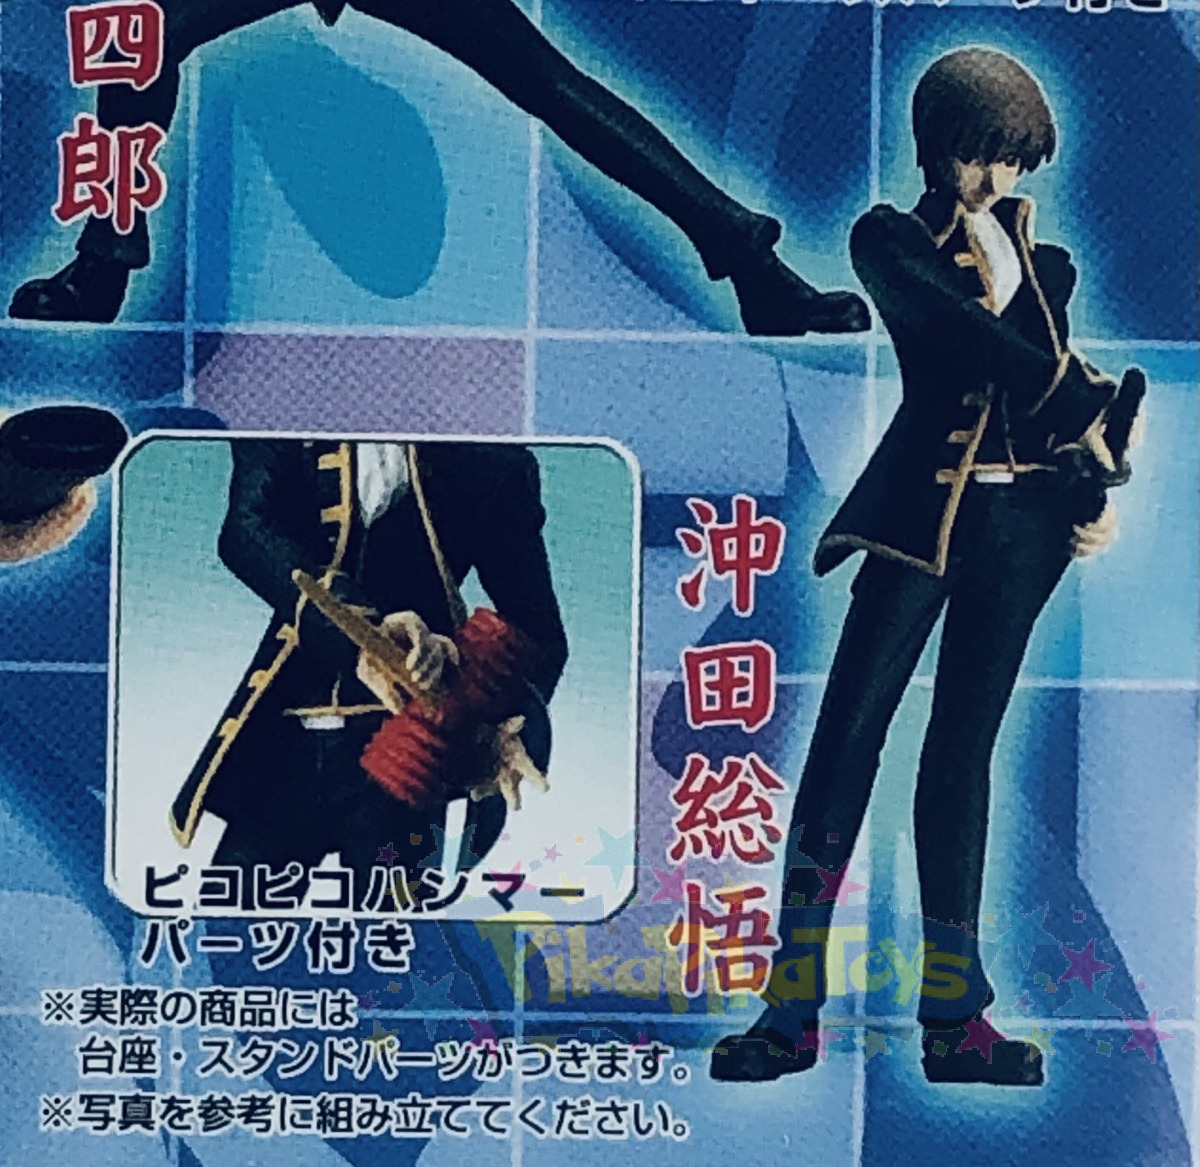 Gintama Characters Trading Figure Bandai 2007 - Sougo Okita + Piko Hammer Extra